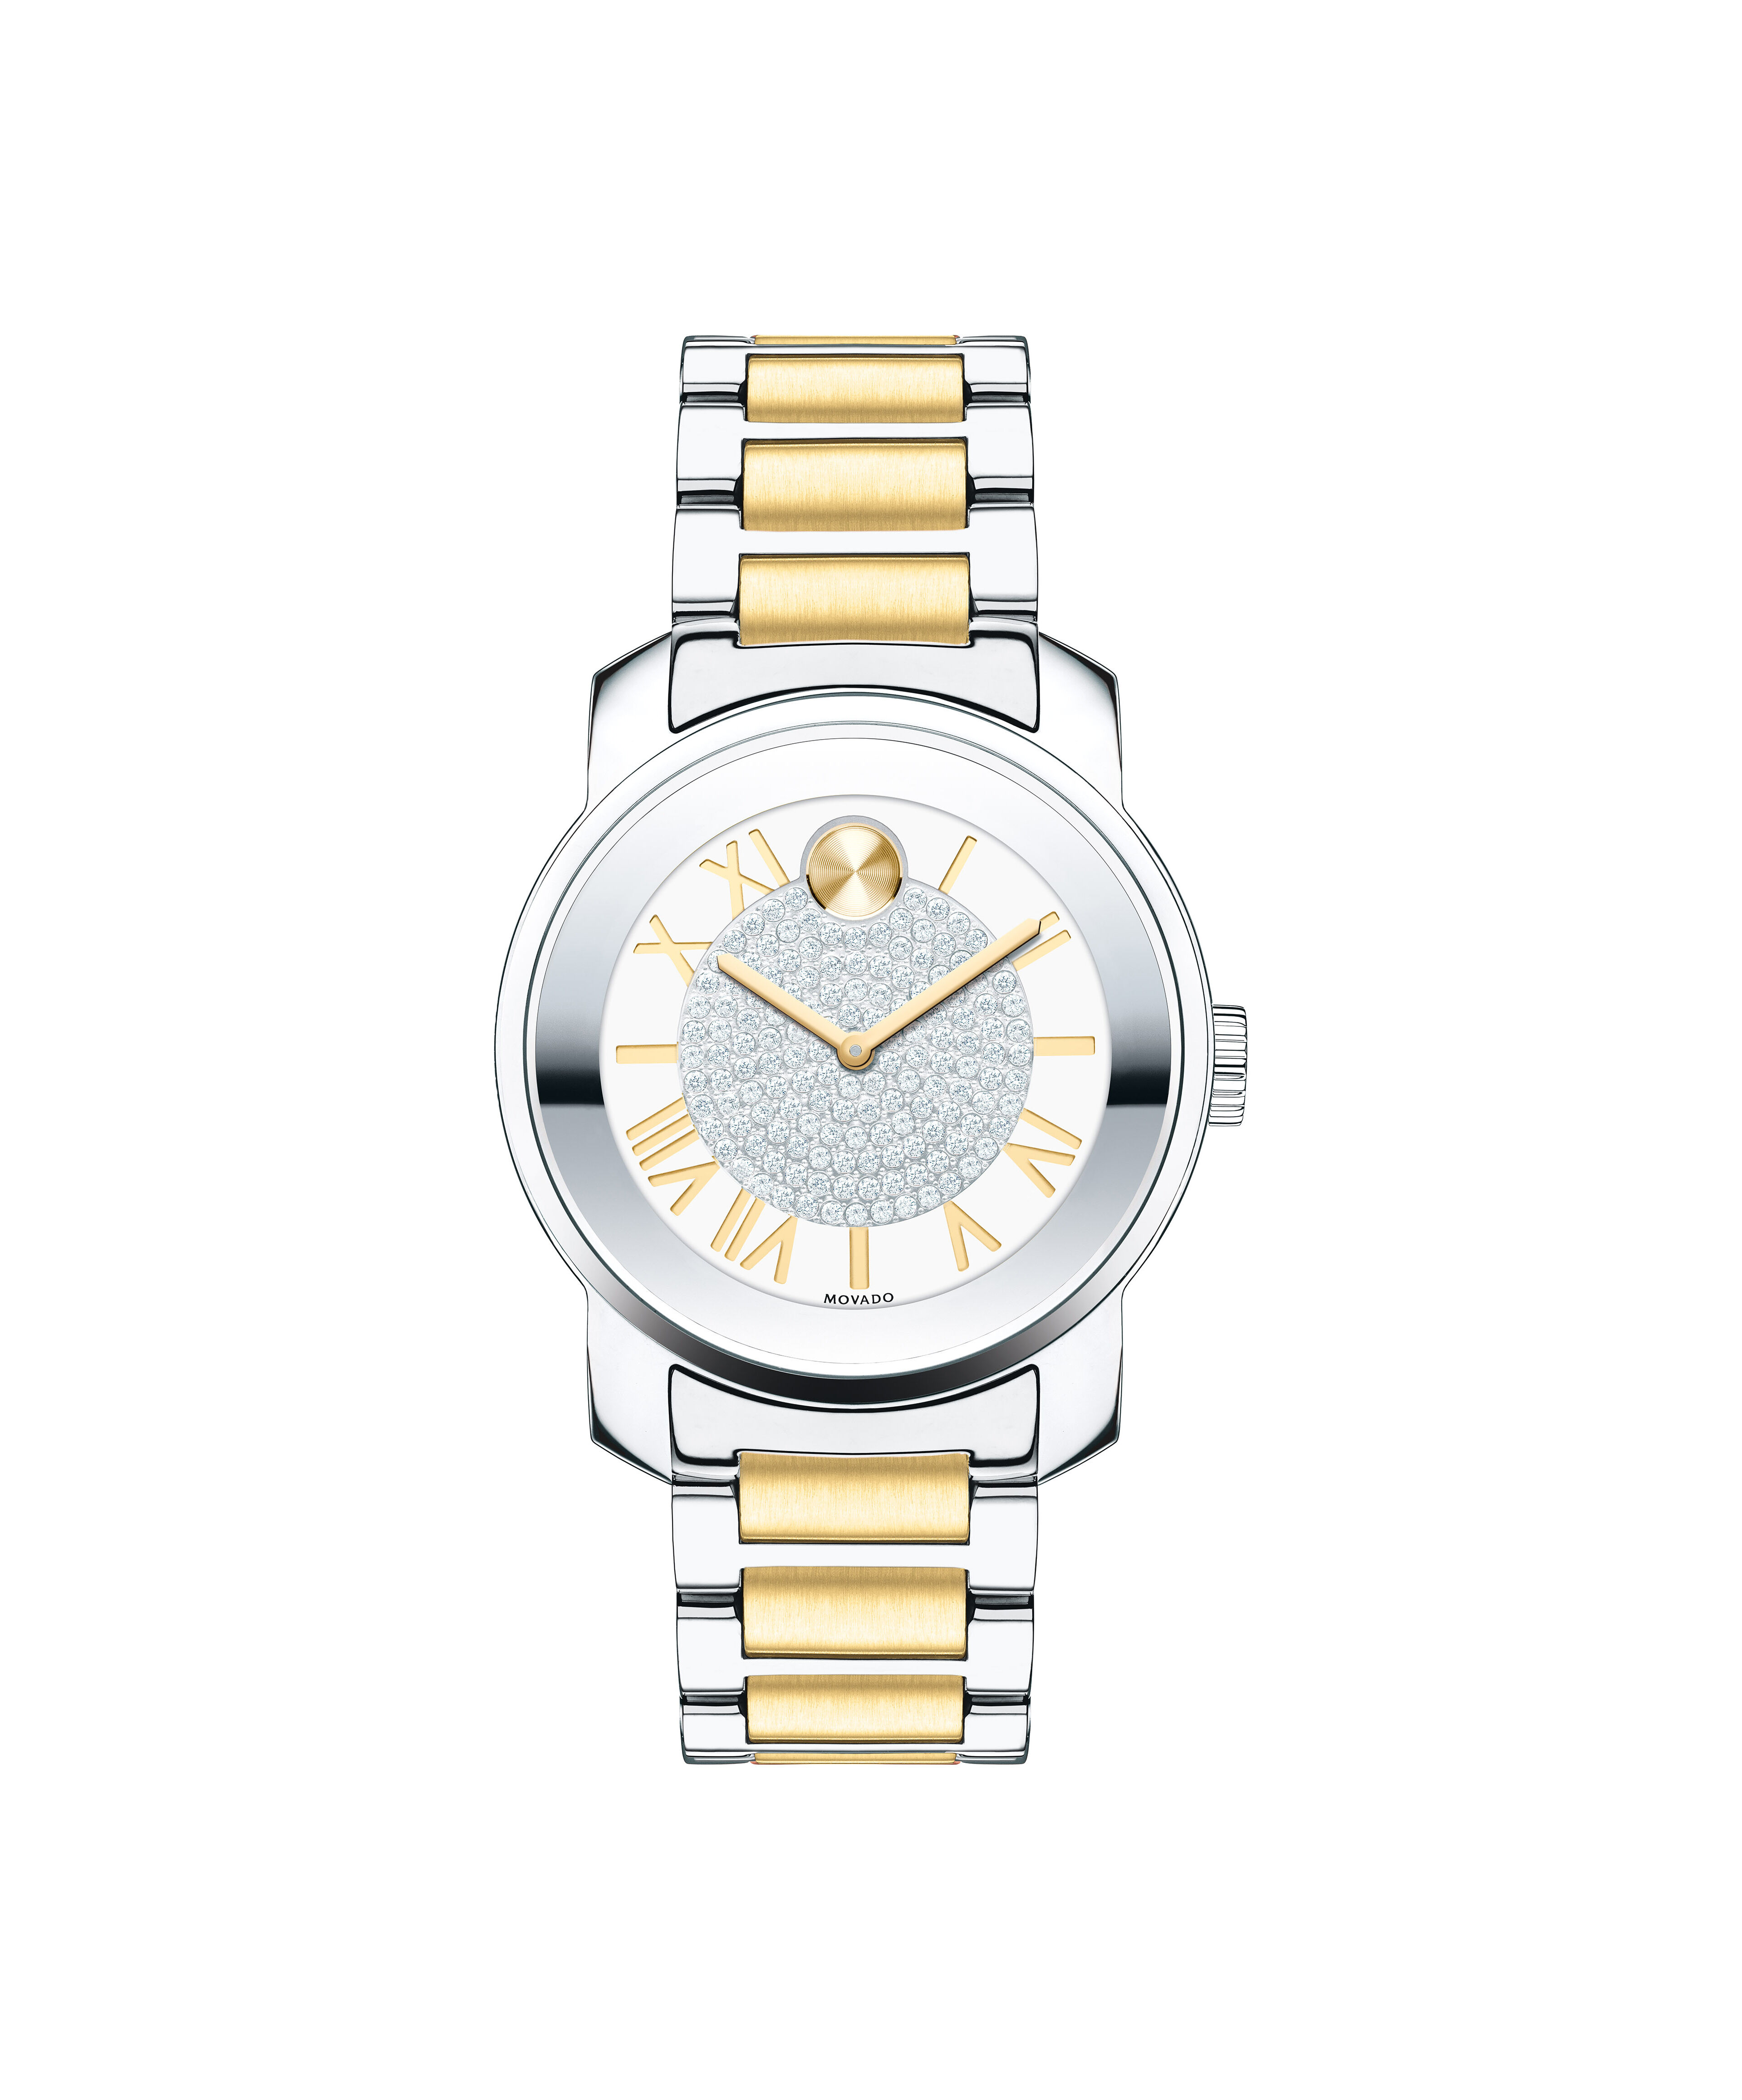 Best Site To Buy Swiss Replica Watches